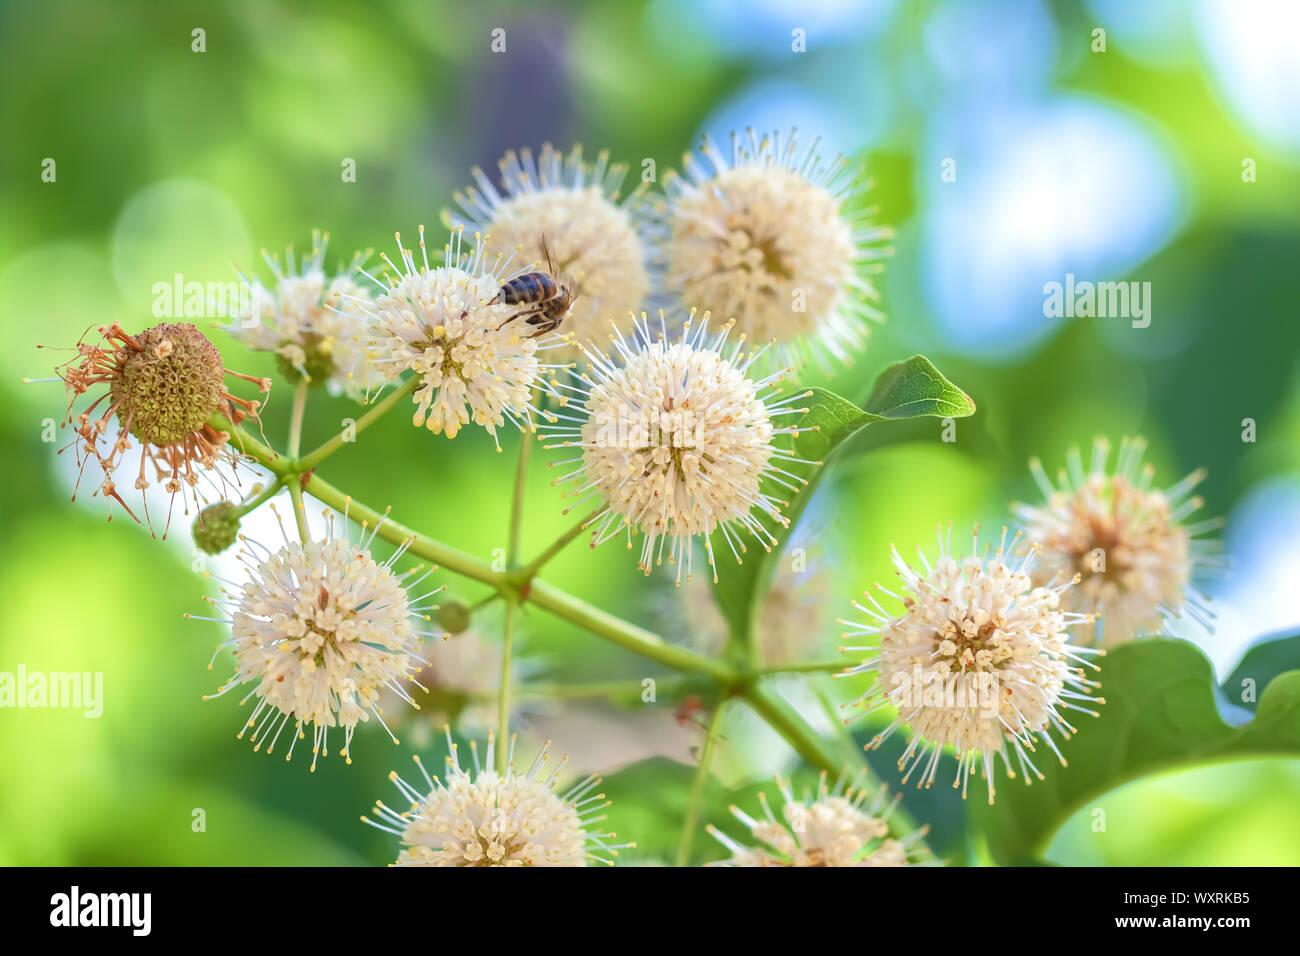 California buttonbush flowers (Cephalanthus occidentalis) with a honeybee. Stock Photo